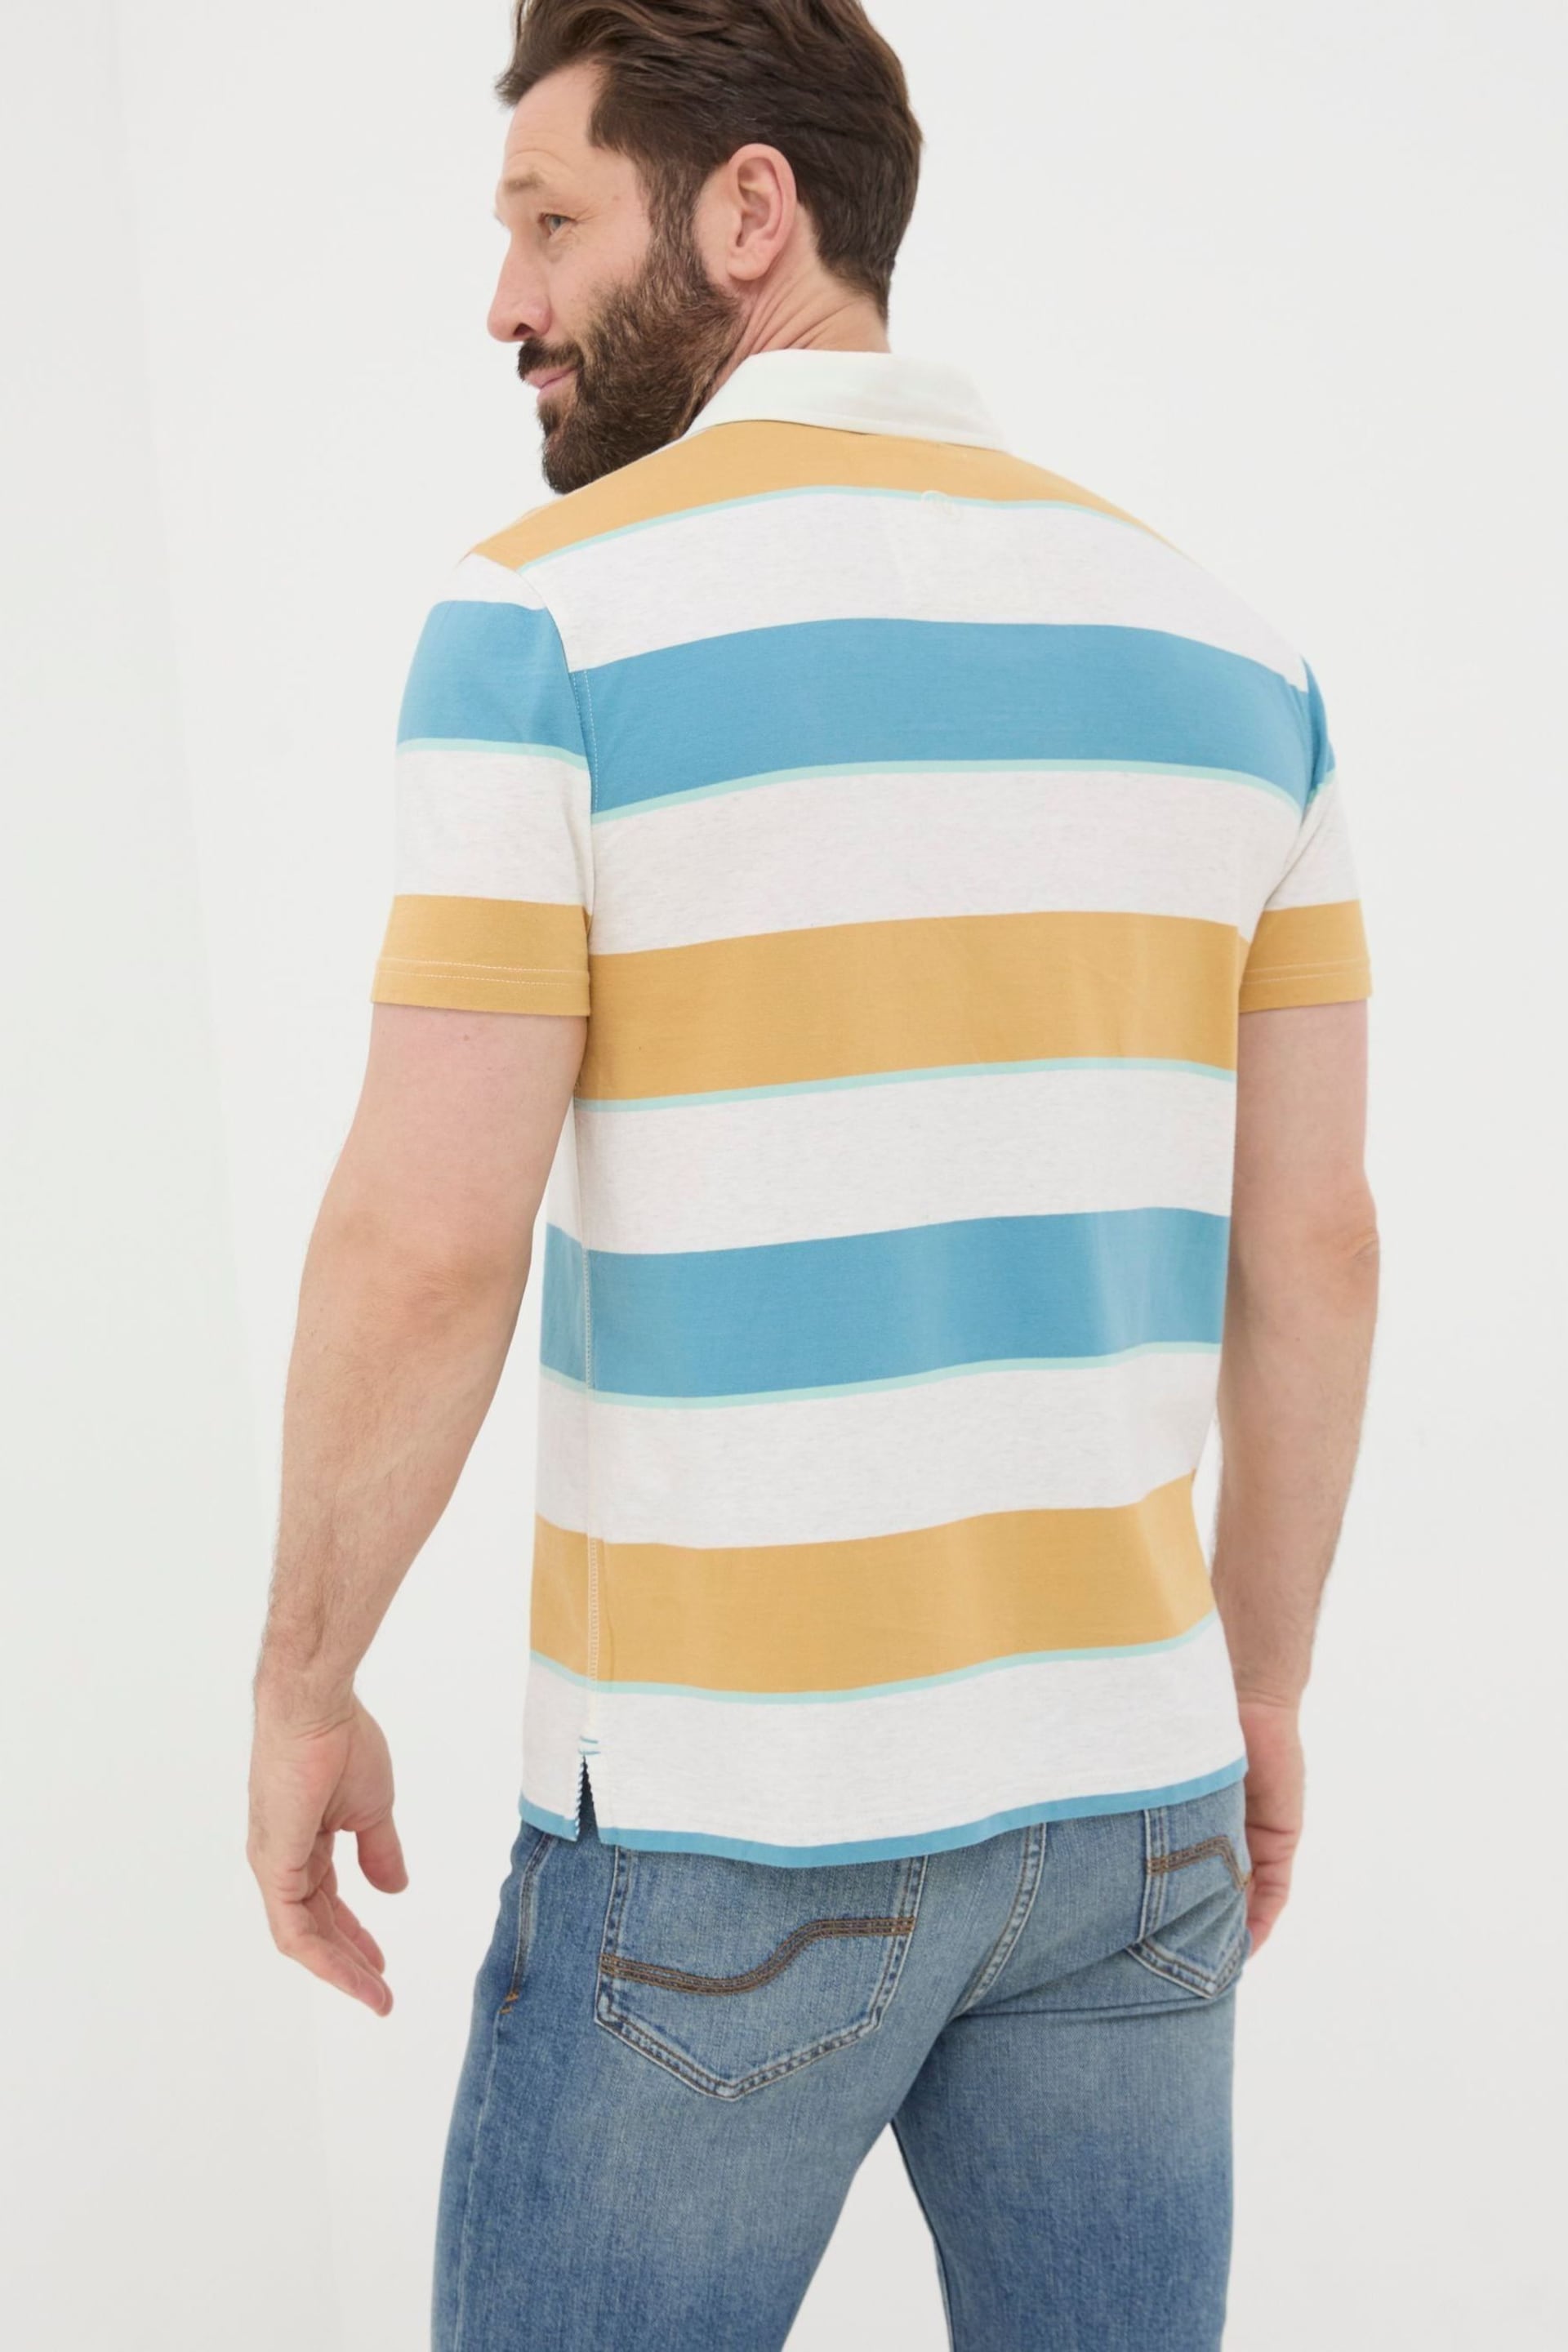 FatFace Yellow Stripe Polo Shirt - Image 2 of 6